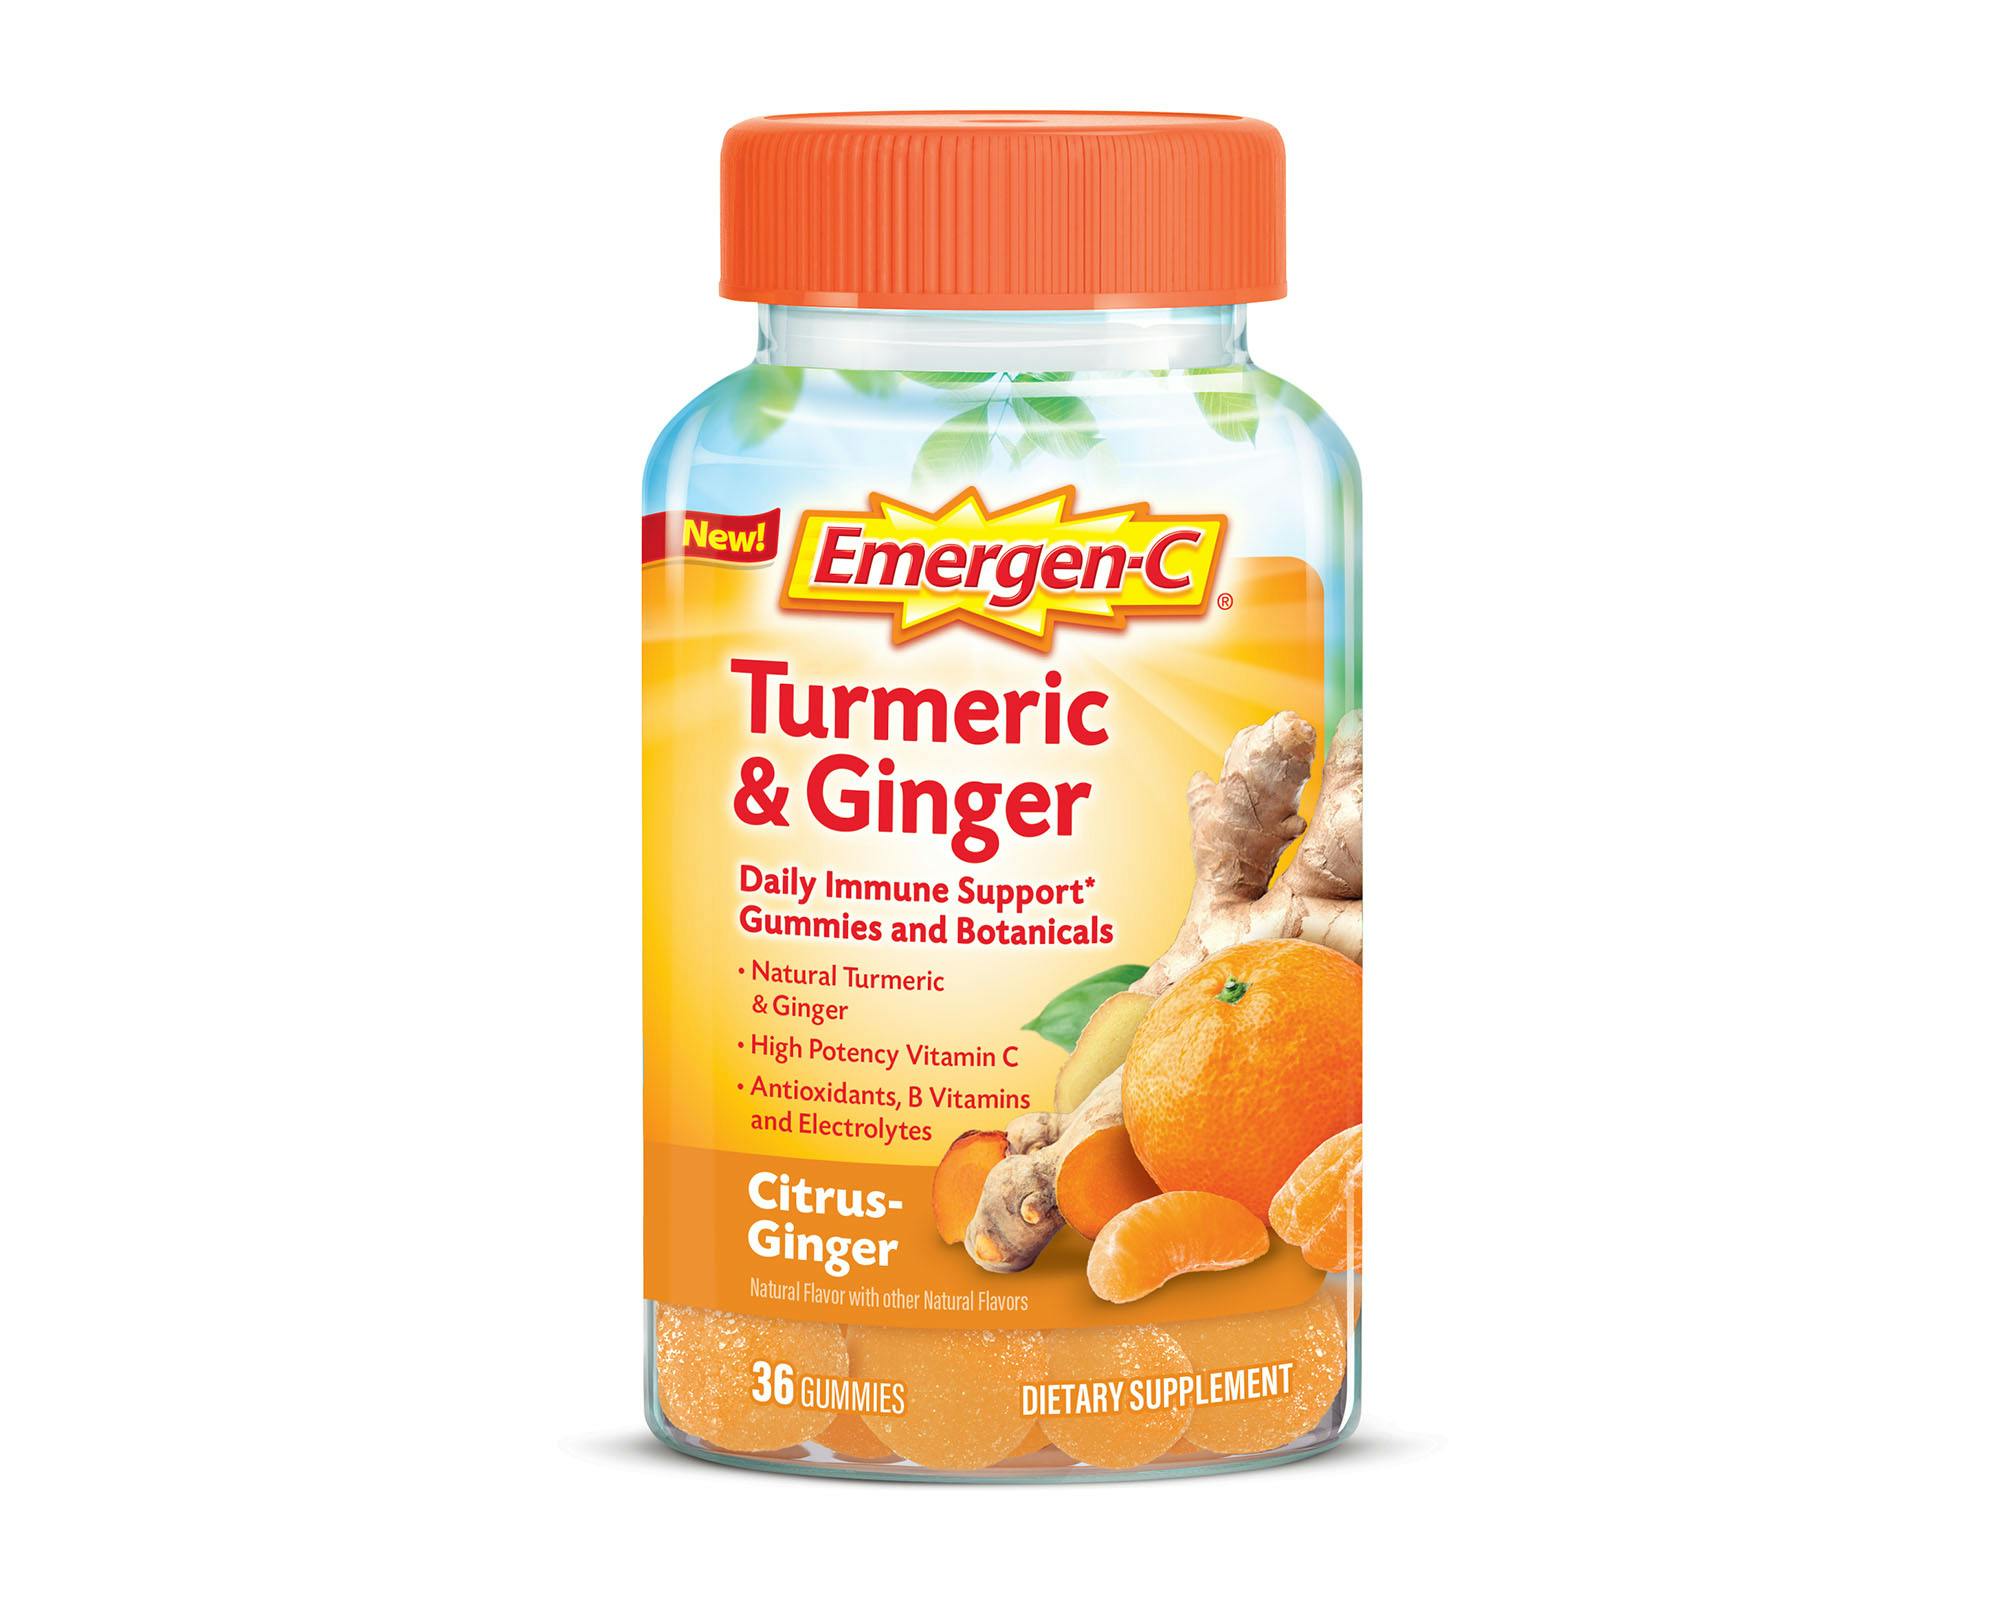 Turmeric & Ginger Botanicals Immune Support Gummies bottle